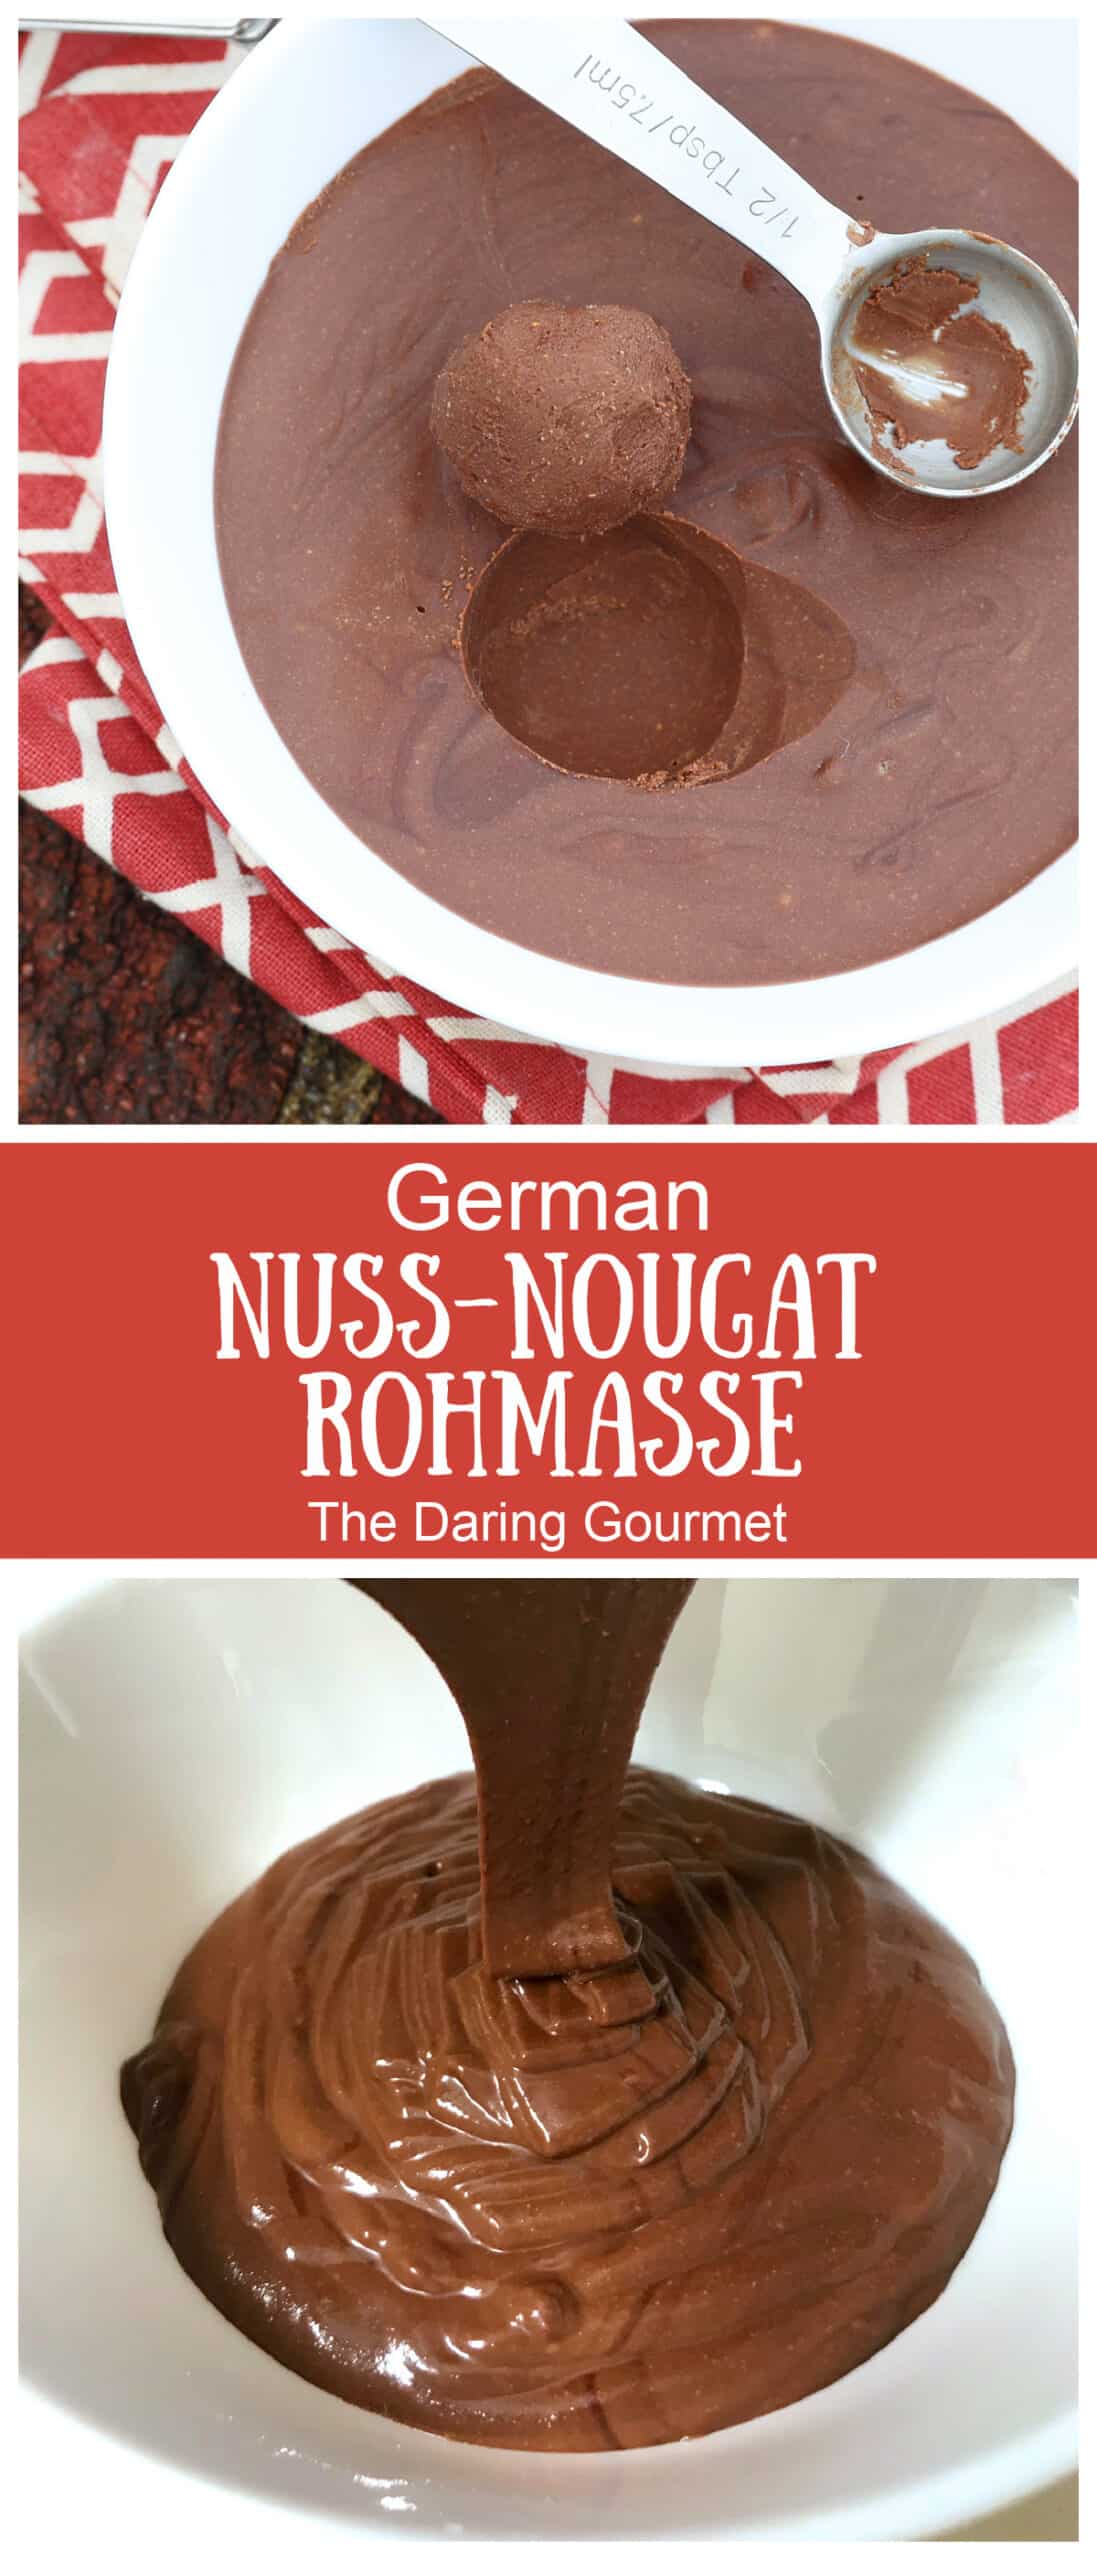 german nougat recipe chocolate hazelnut rohmasse baking mozartkugel filling truffles gianduja